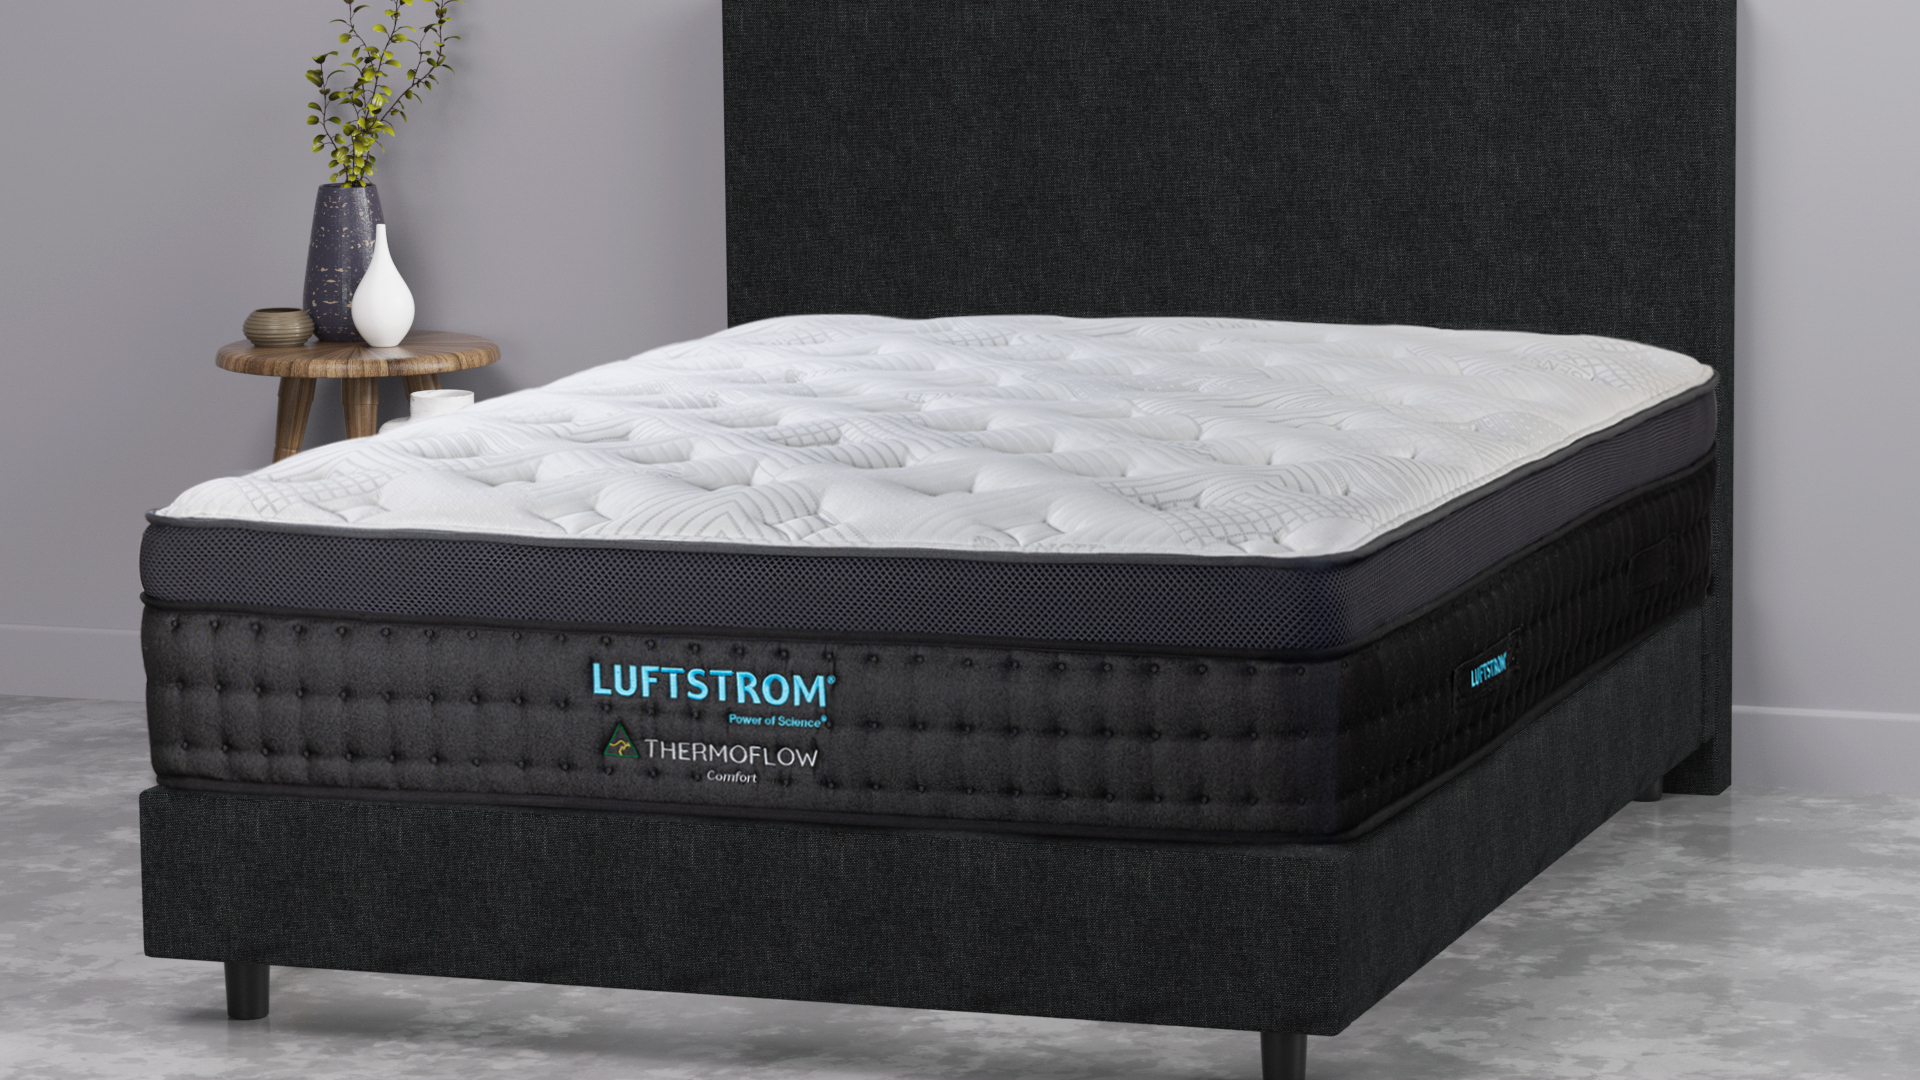 Luftstrom Thermoflow Comfort Medium Mattress